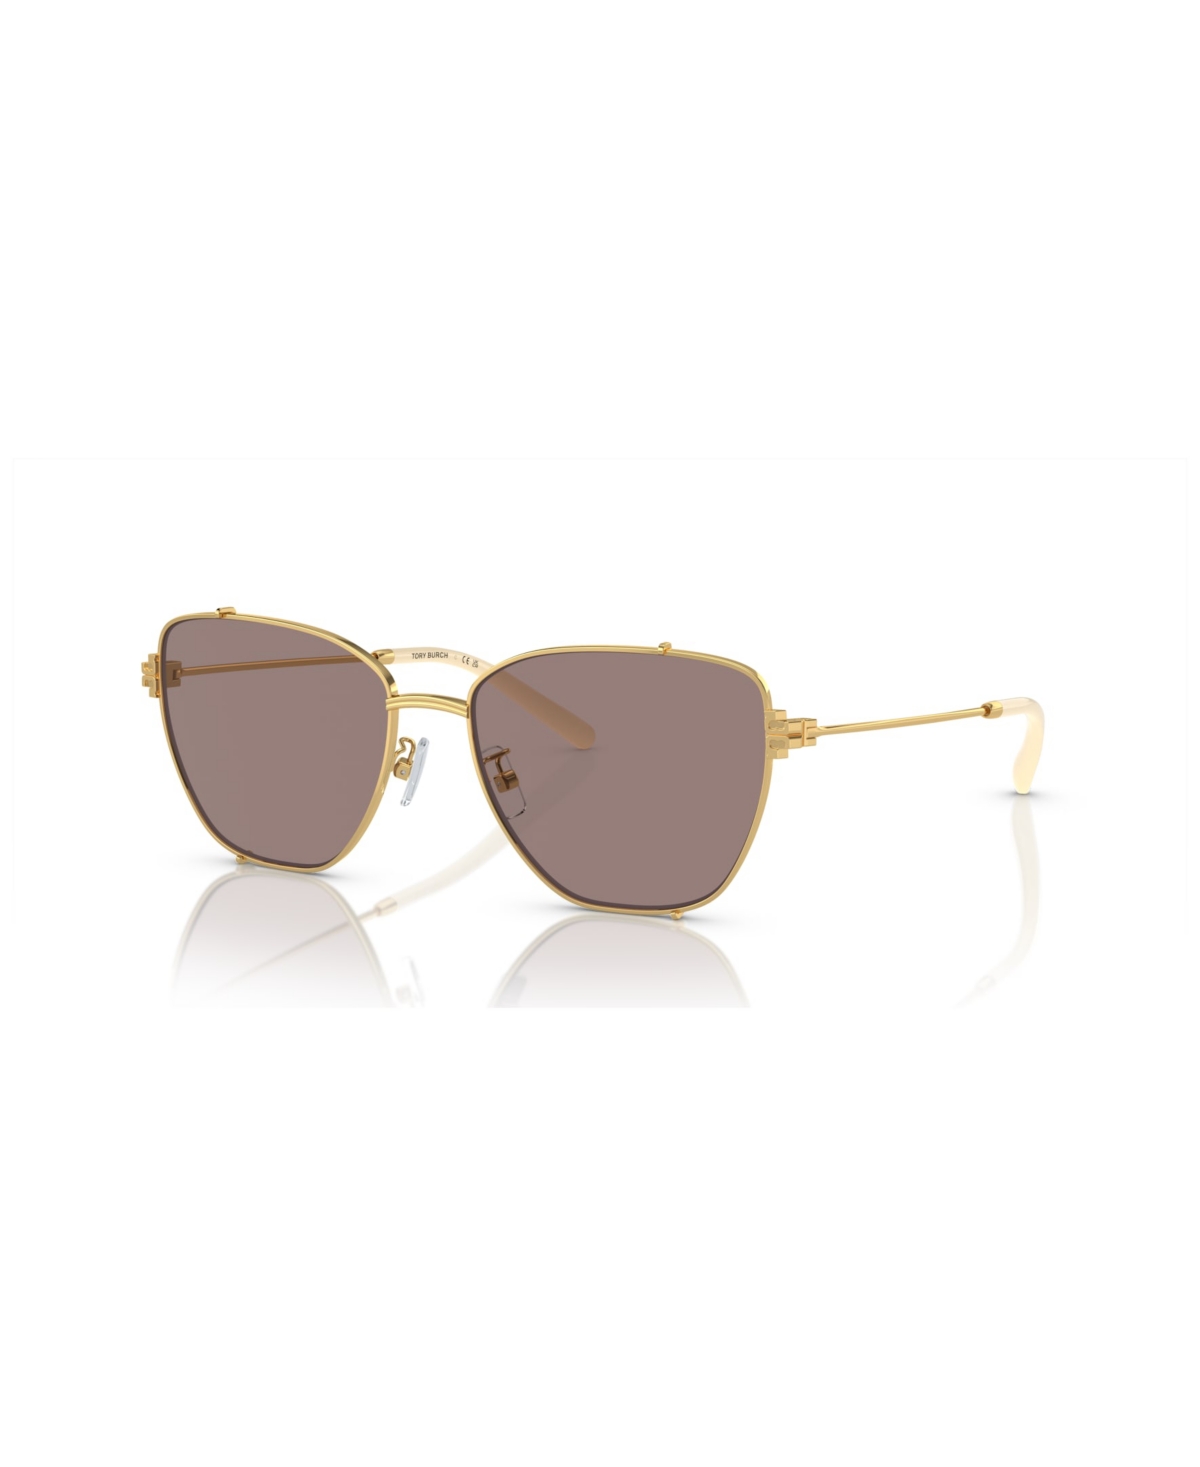 Tory Burch Women's Sunglasses Ty6105 In Shiny Gold